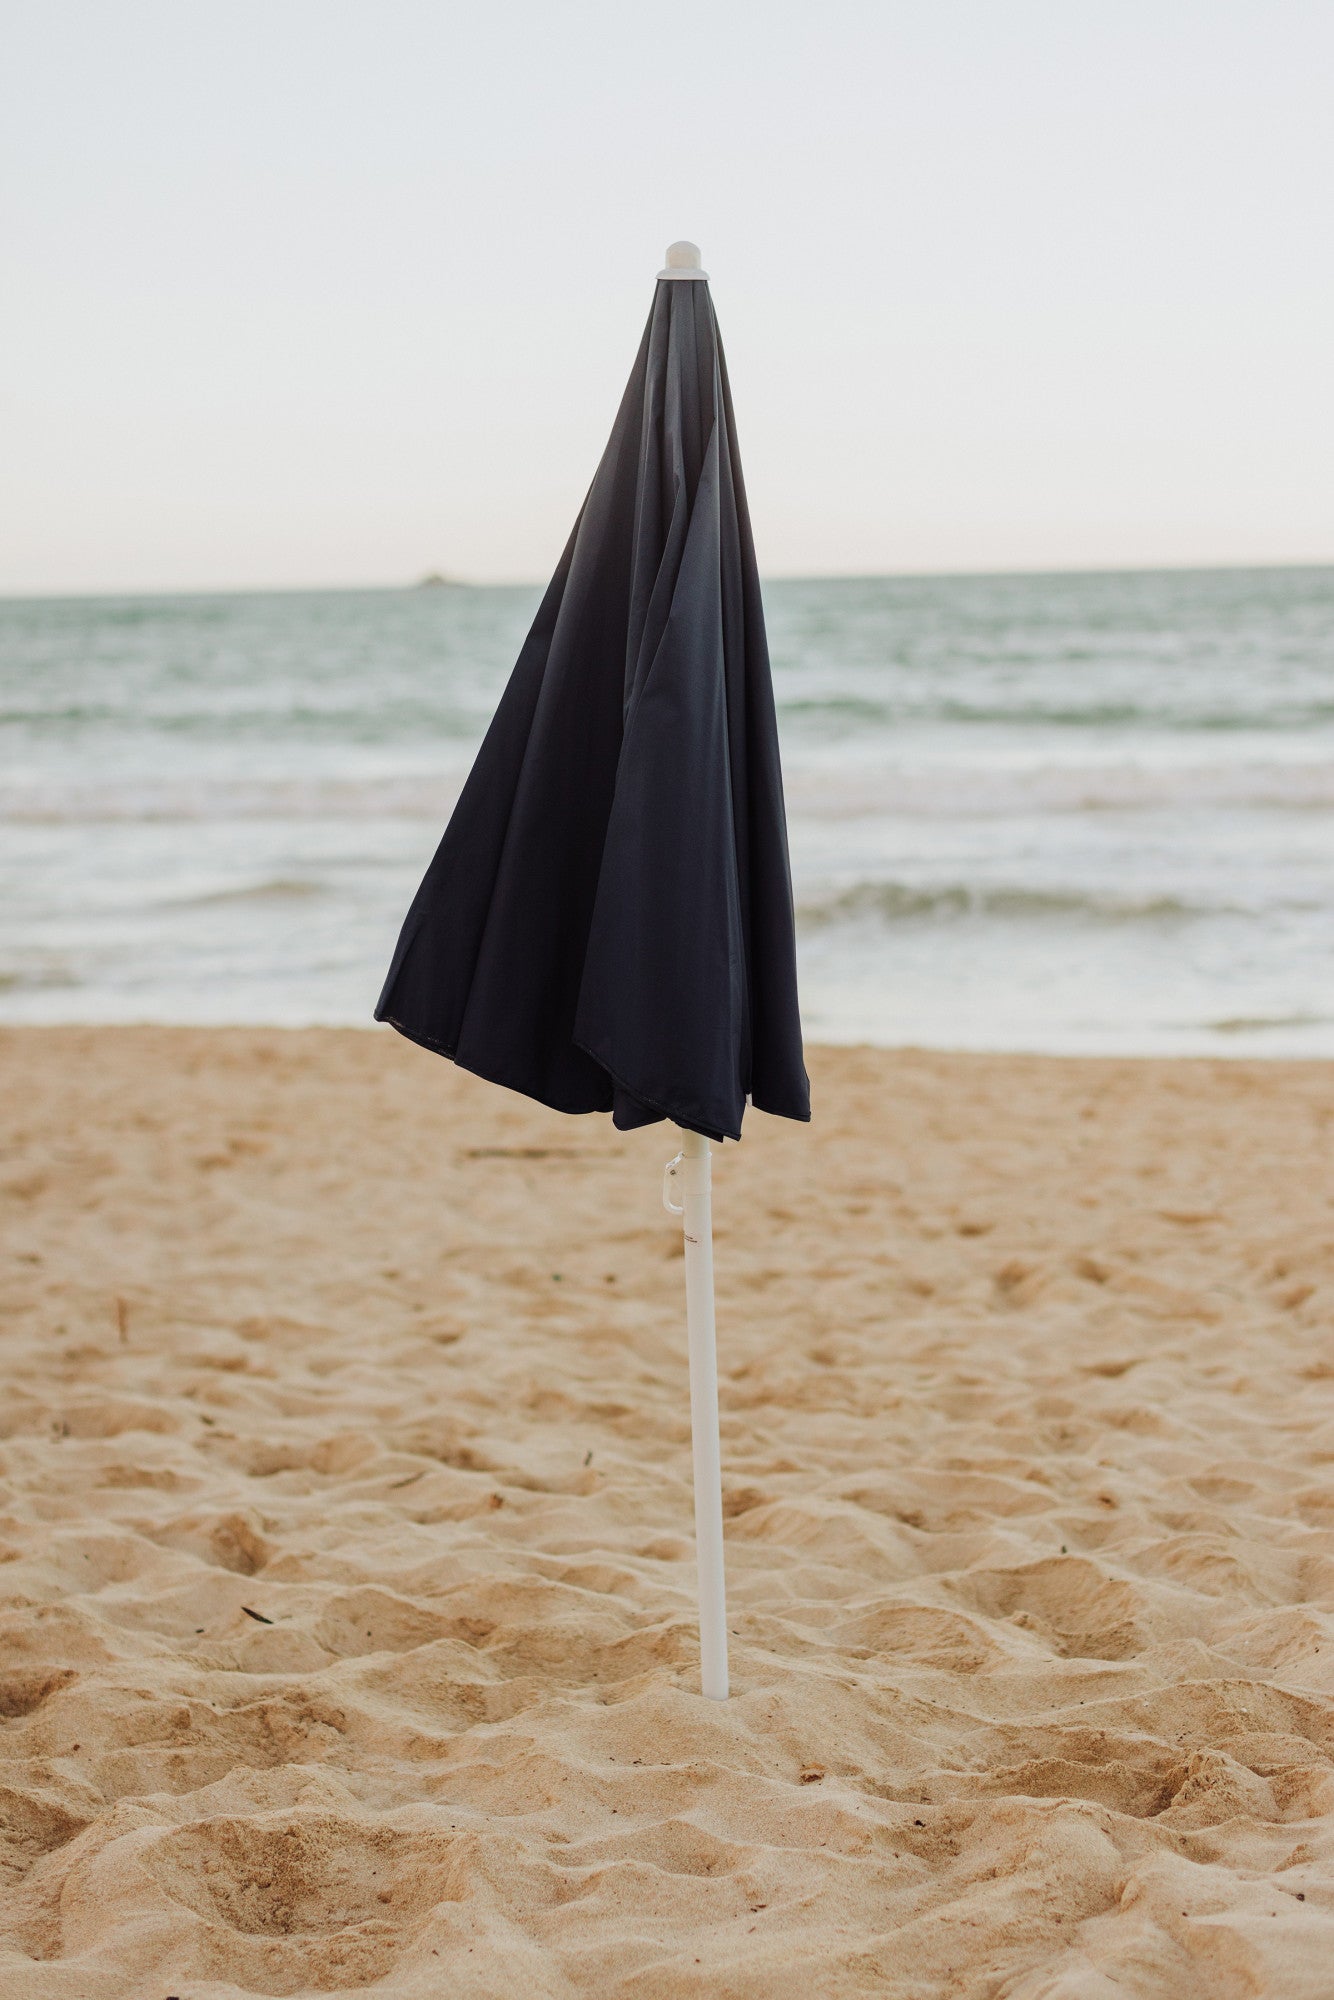 Auburn Tigers - 5.5 Ft. Portable Beach Umbrella